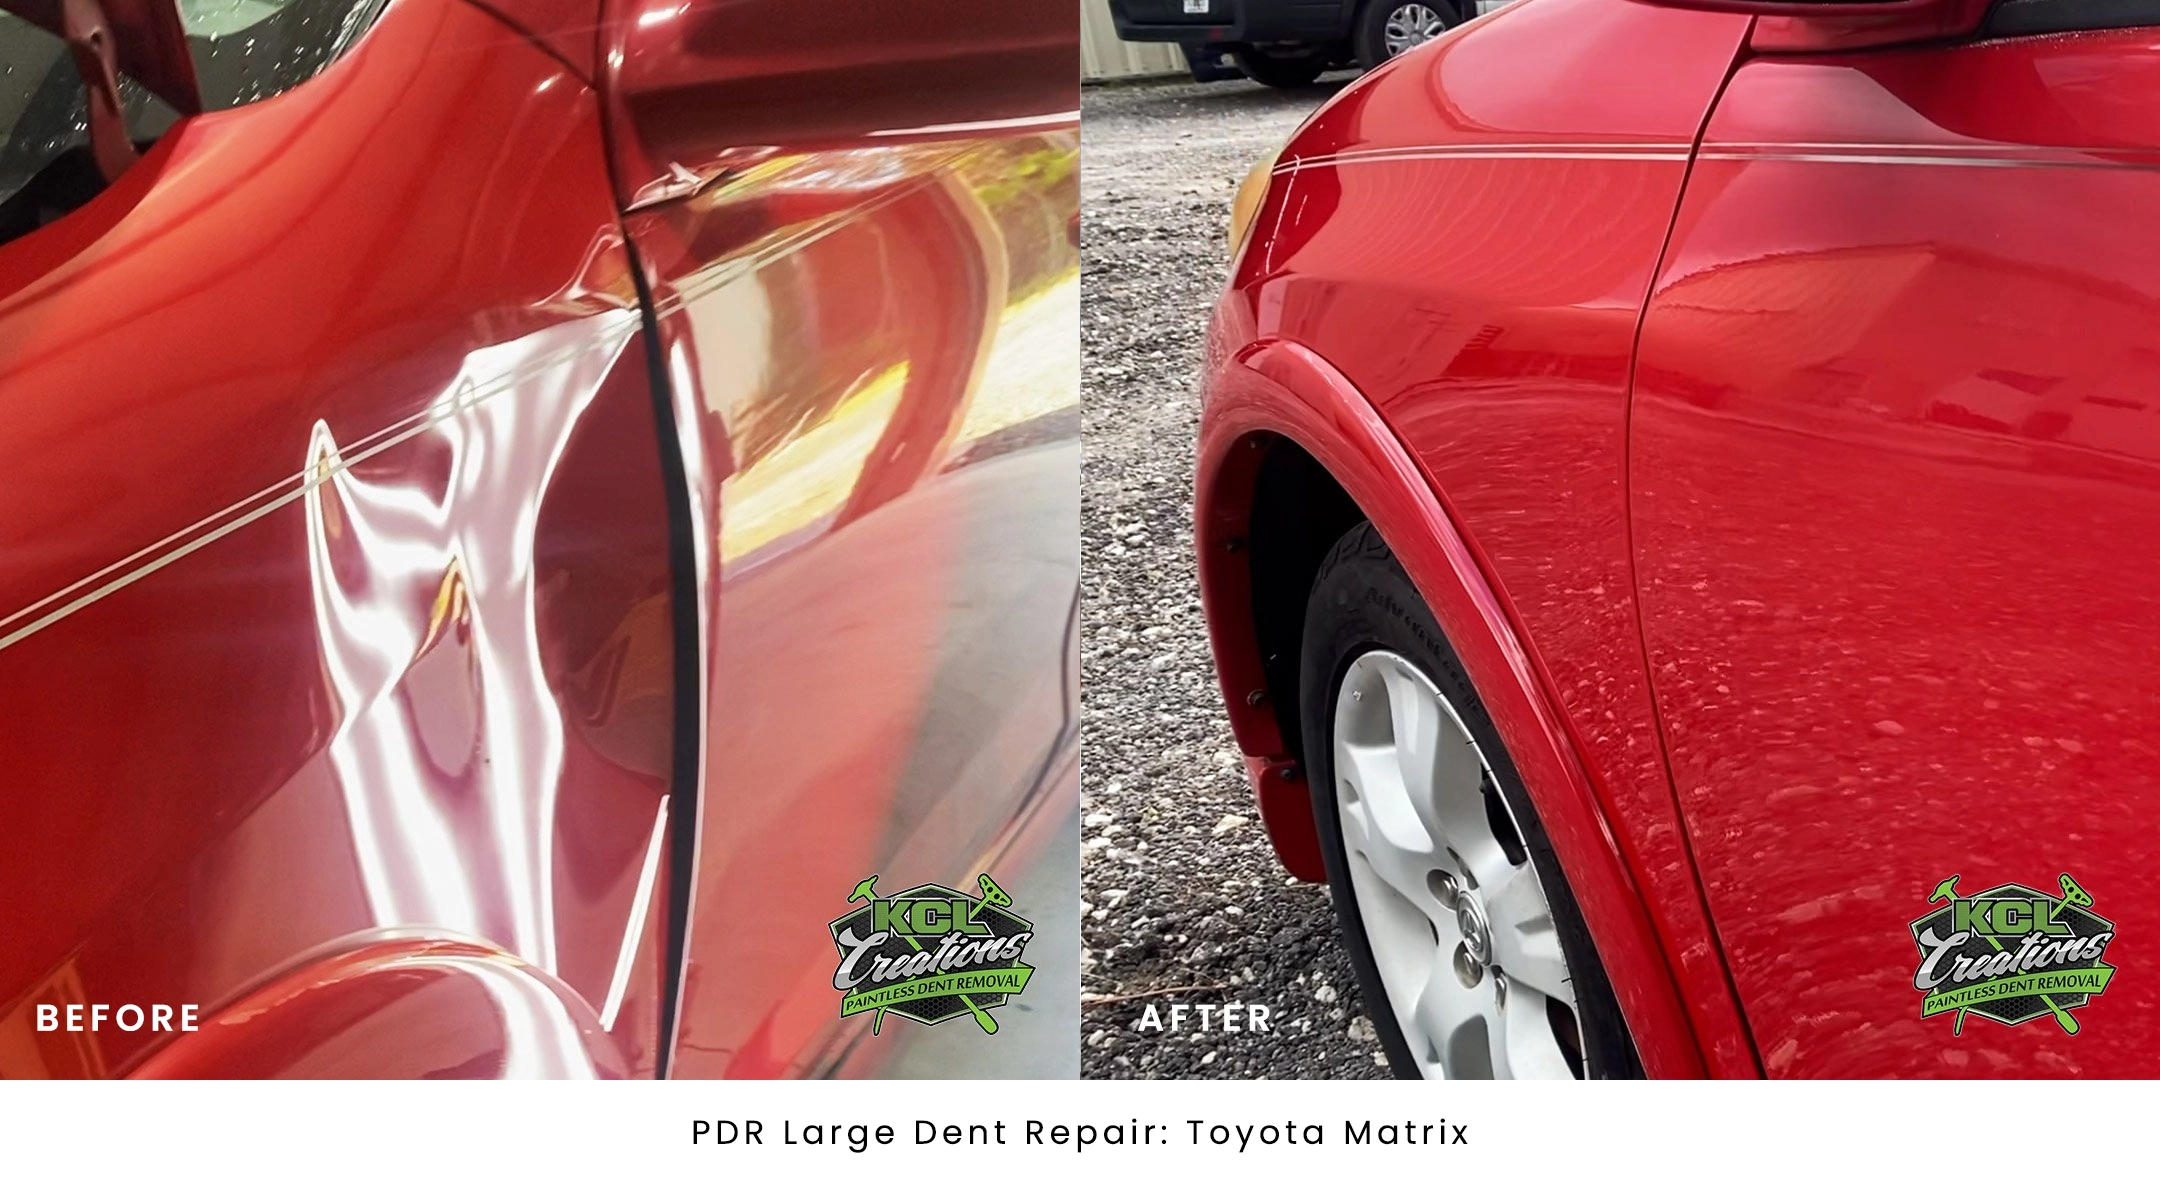 PDR Large Dent Repair Toyota Matrix copy